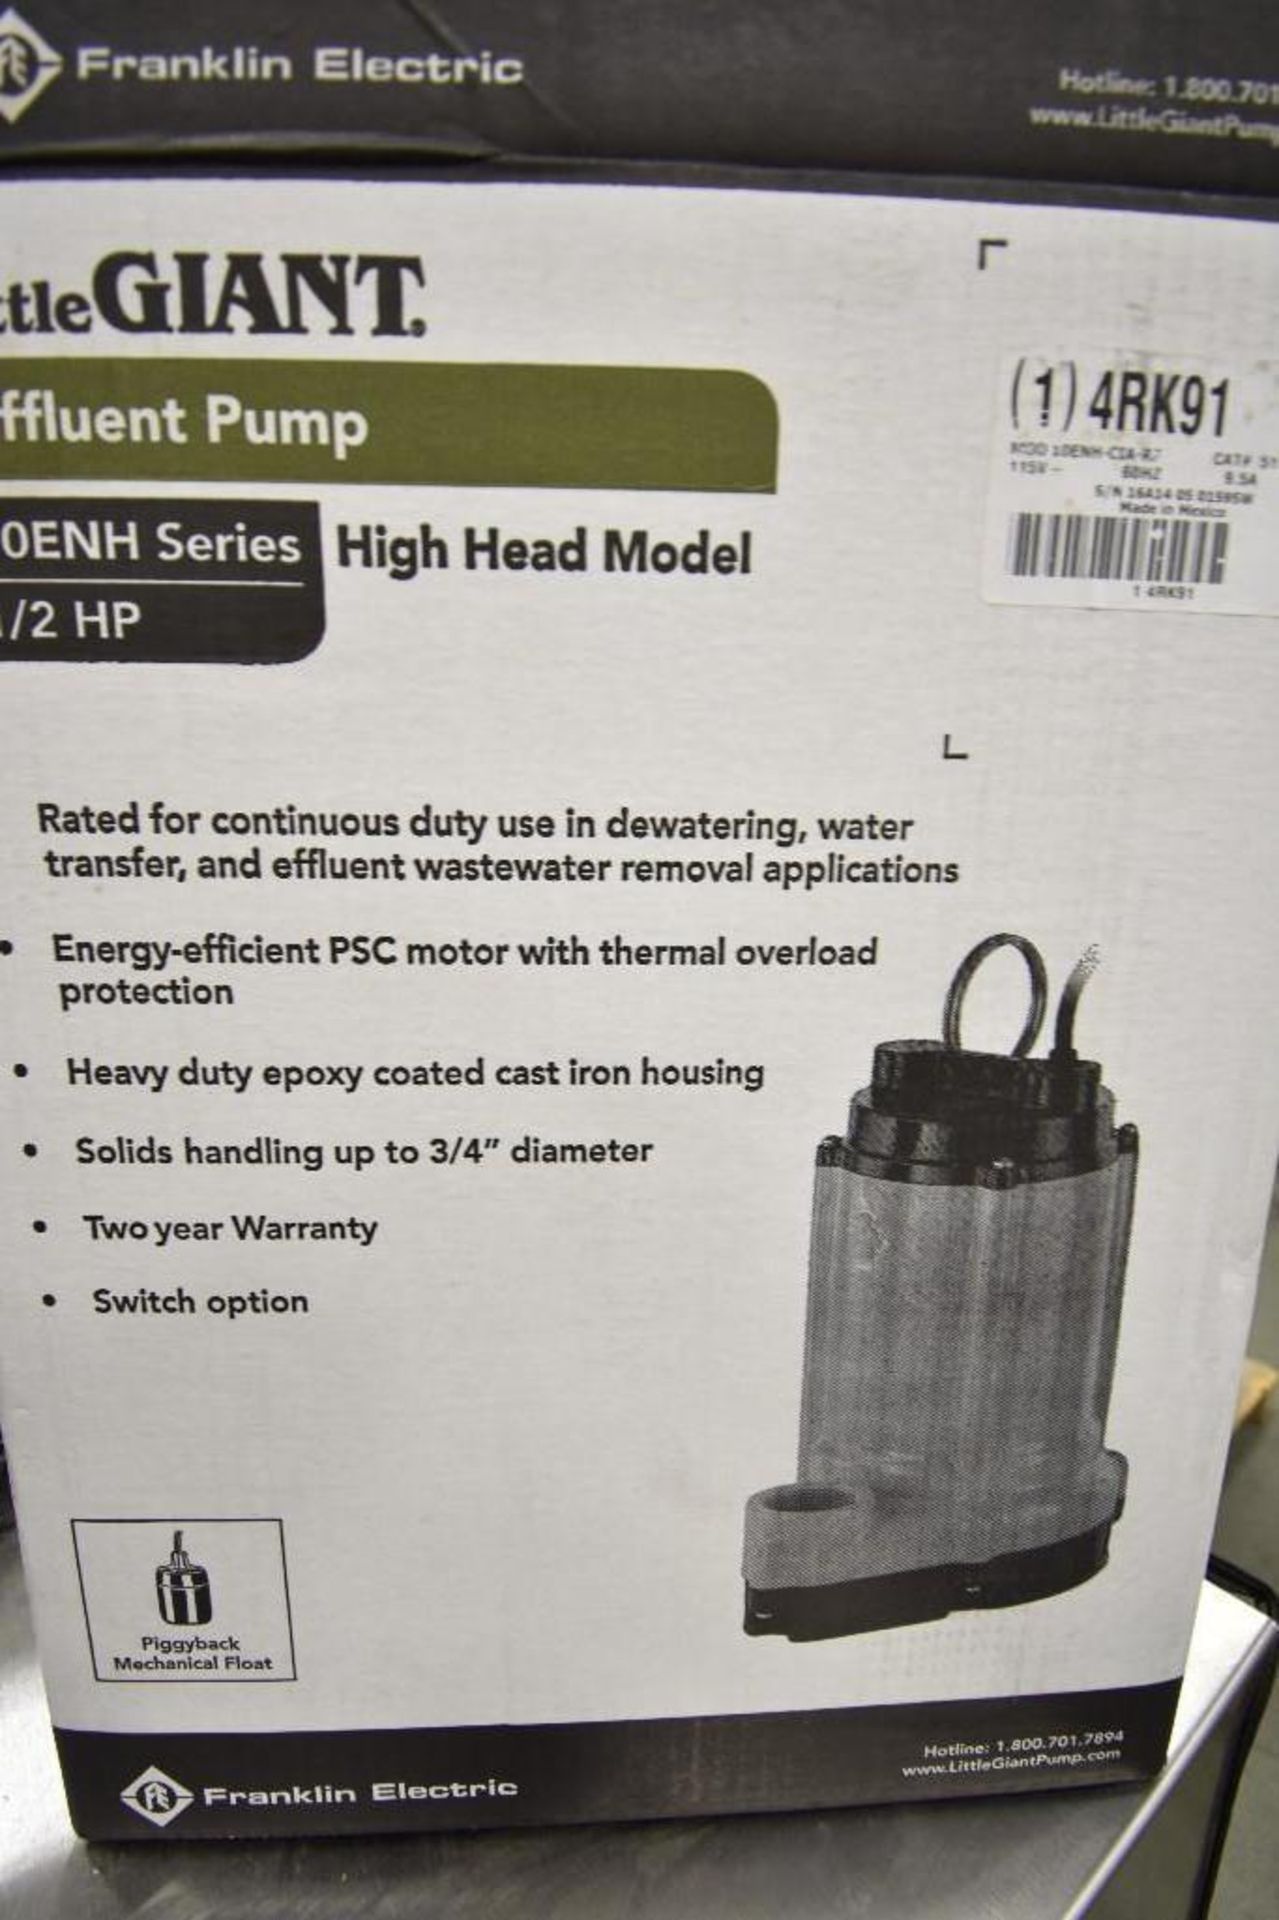 Little Giant Effluent Pump. High Head Model. Series 10ENH, 1/2hp - Image 5 of 8